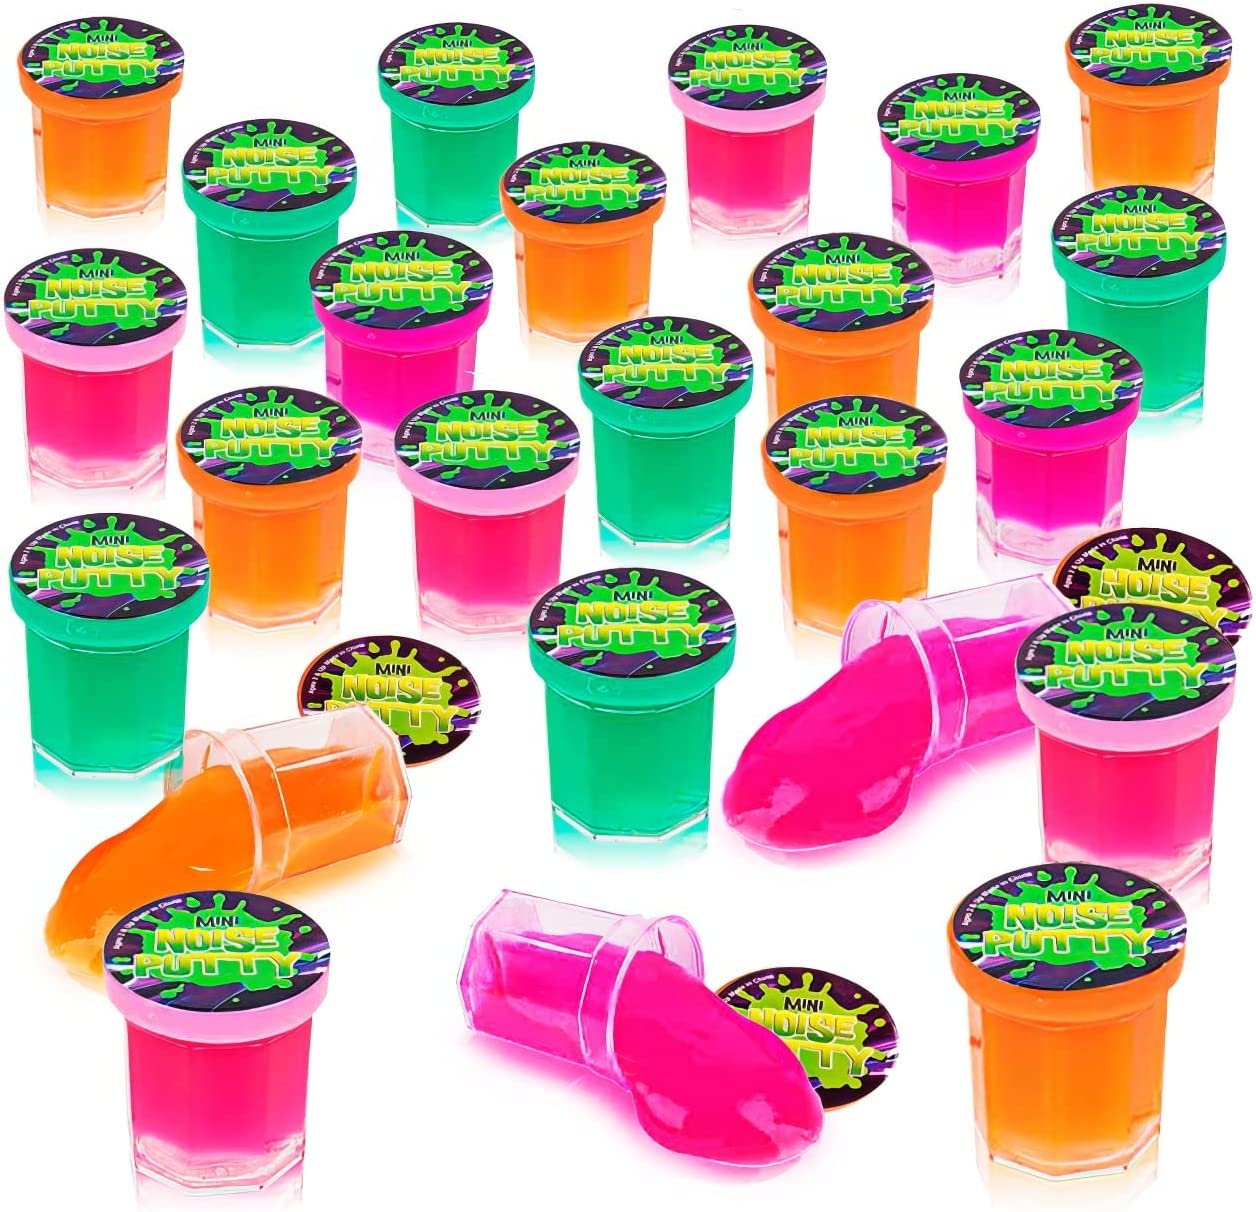  Rainbow Glitter Slime Filled Eggs (1 Dozen) Easter Egg Hunt  Supplies, Birthday Party Favors & Prizes : Toys & Games